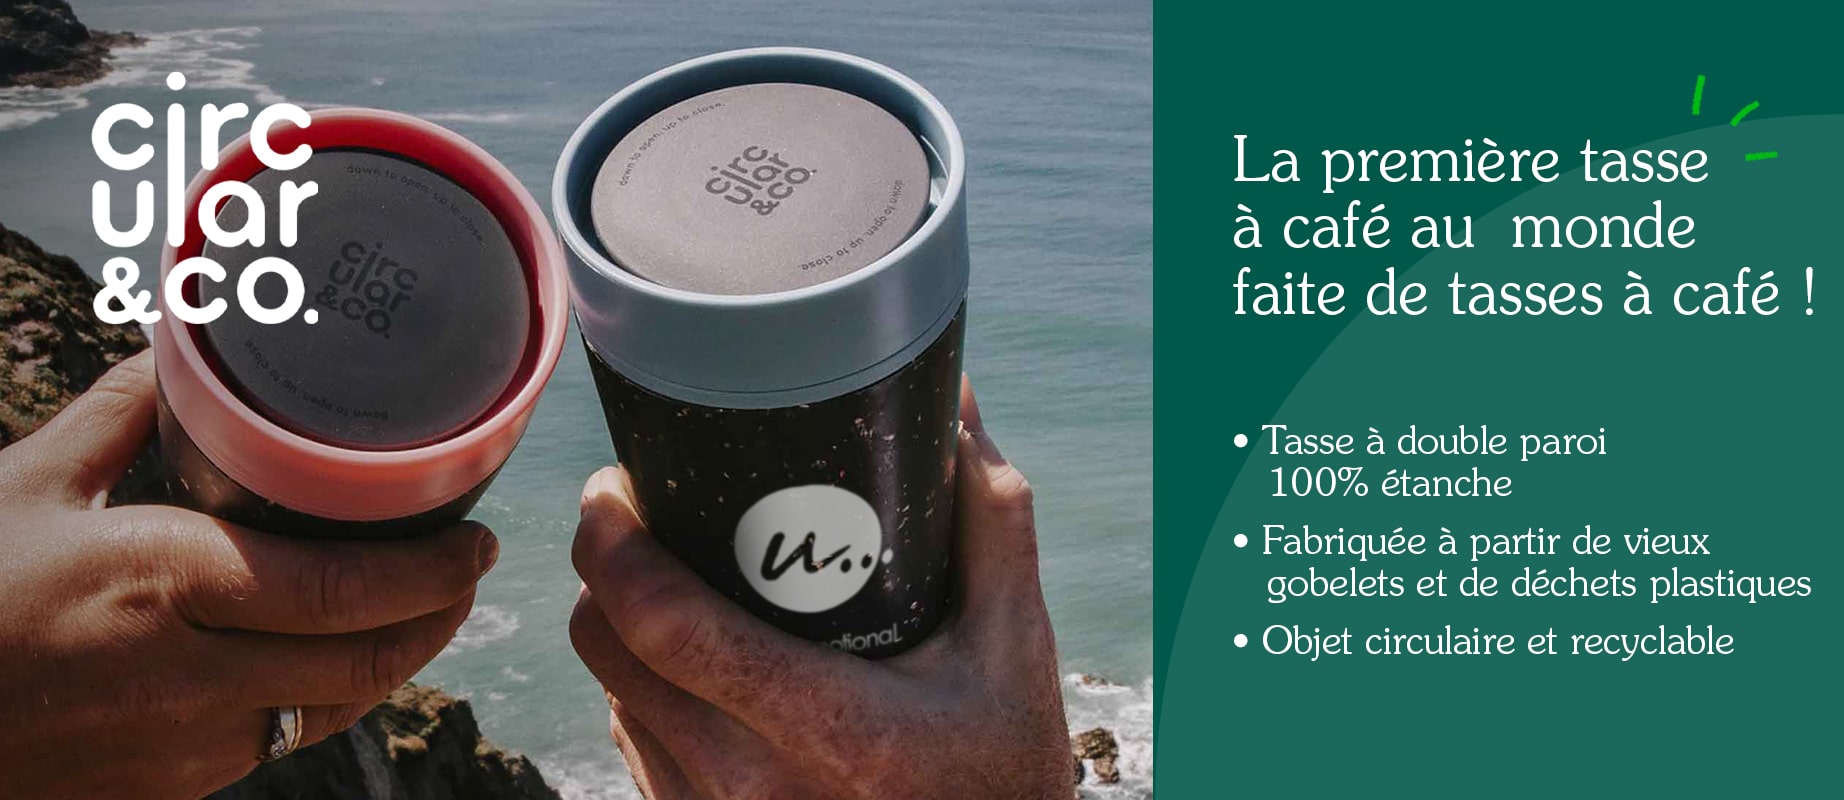 Tasses à café à emporter recyclées de la marque Circular & co